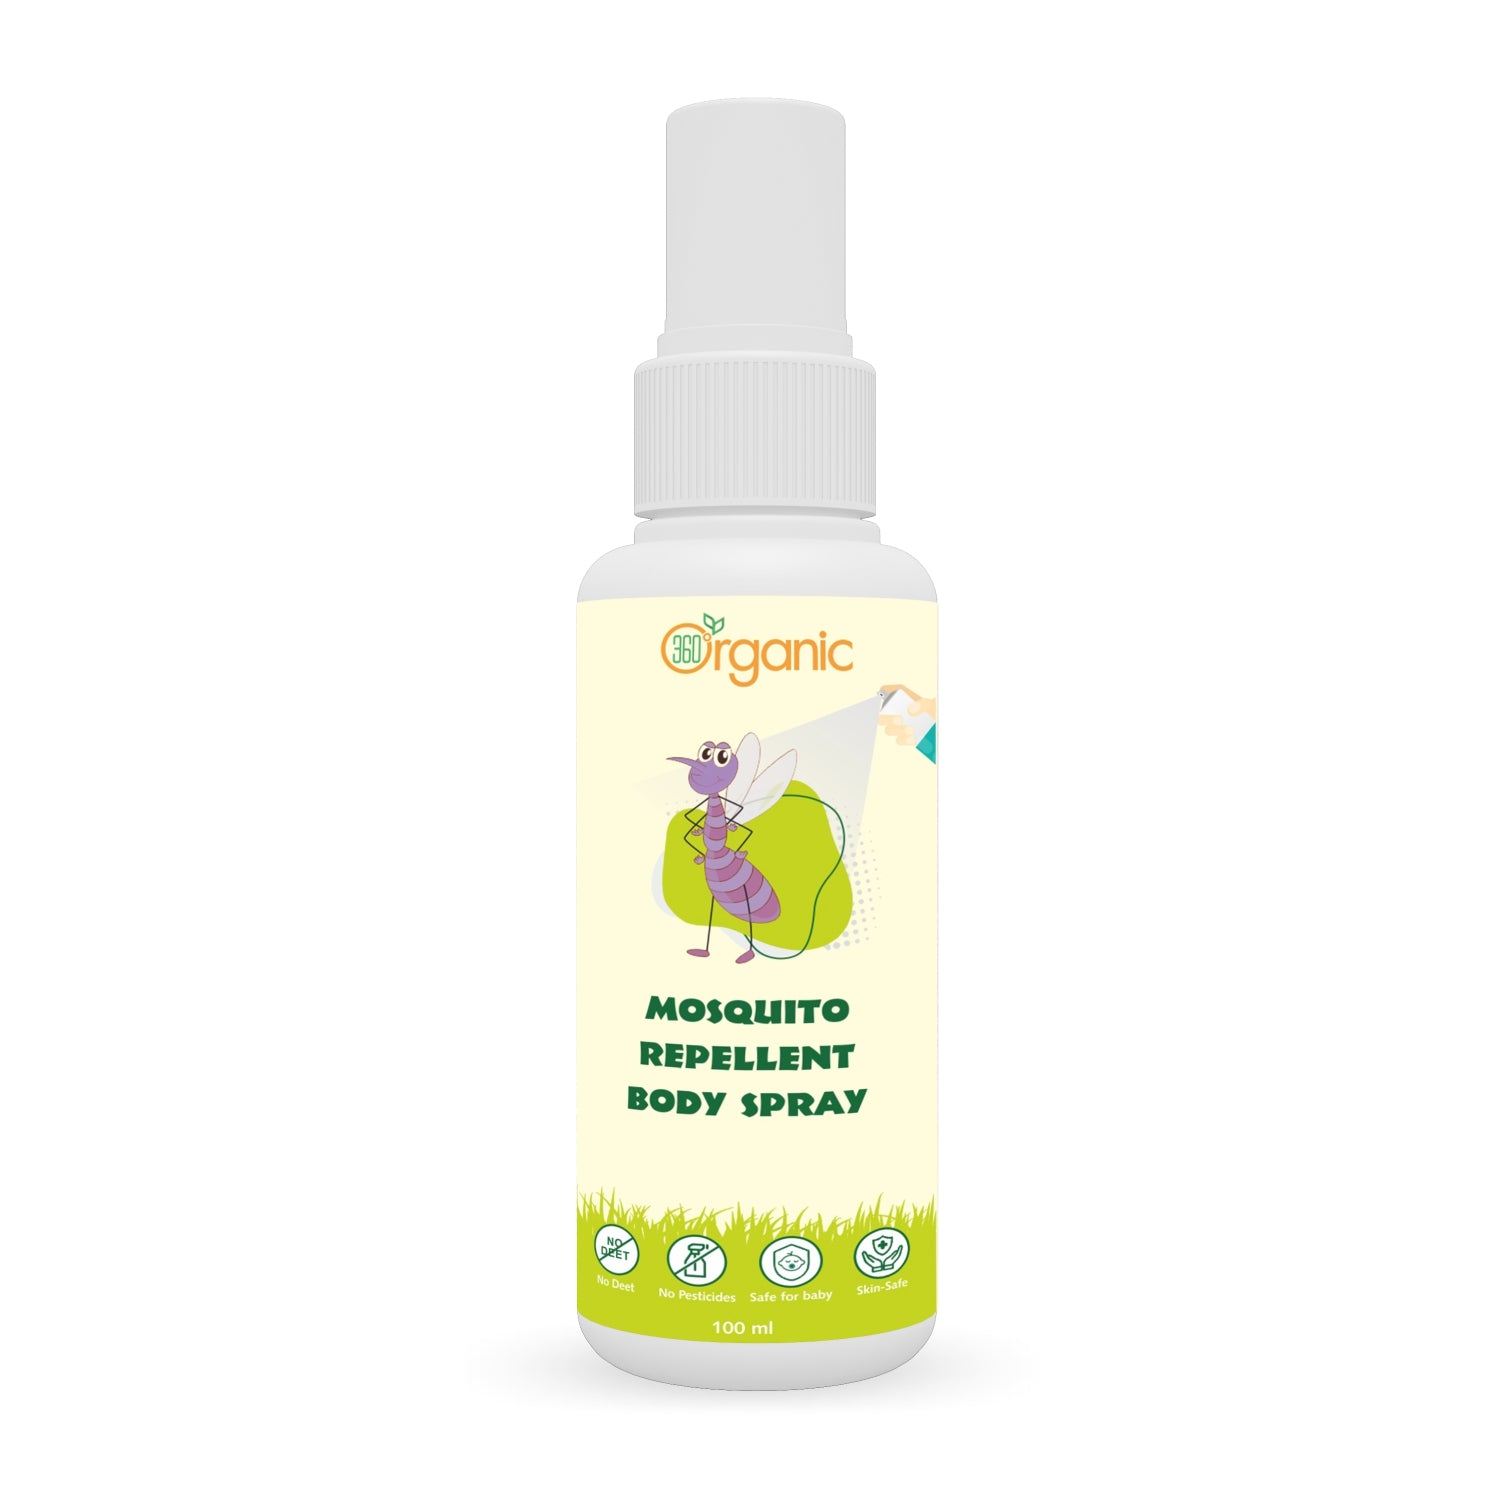 360 Degree Organic Mosquito Repellent Body Spray - 100 ml